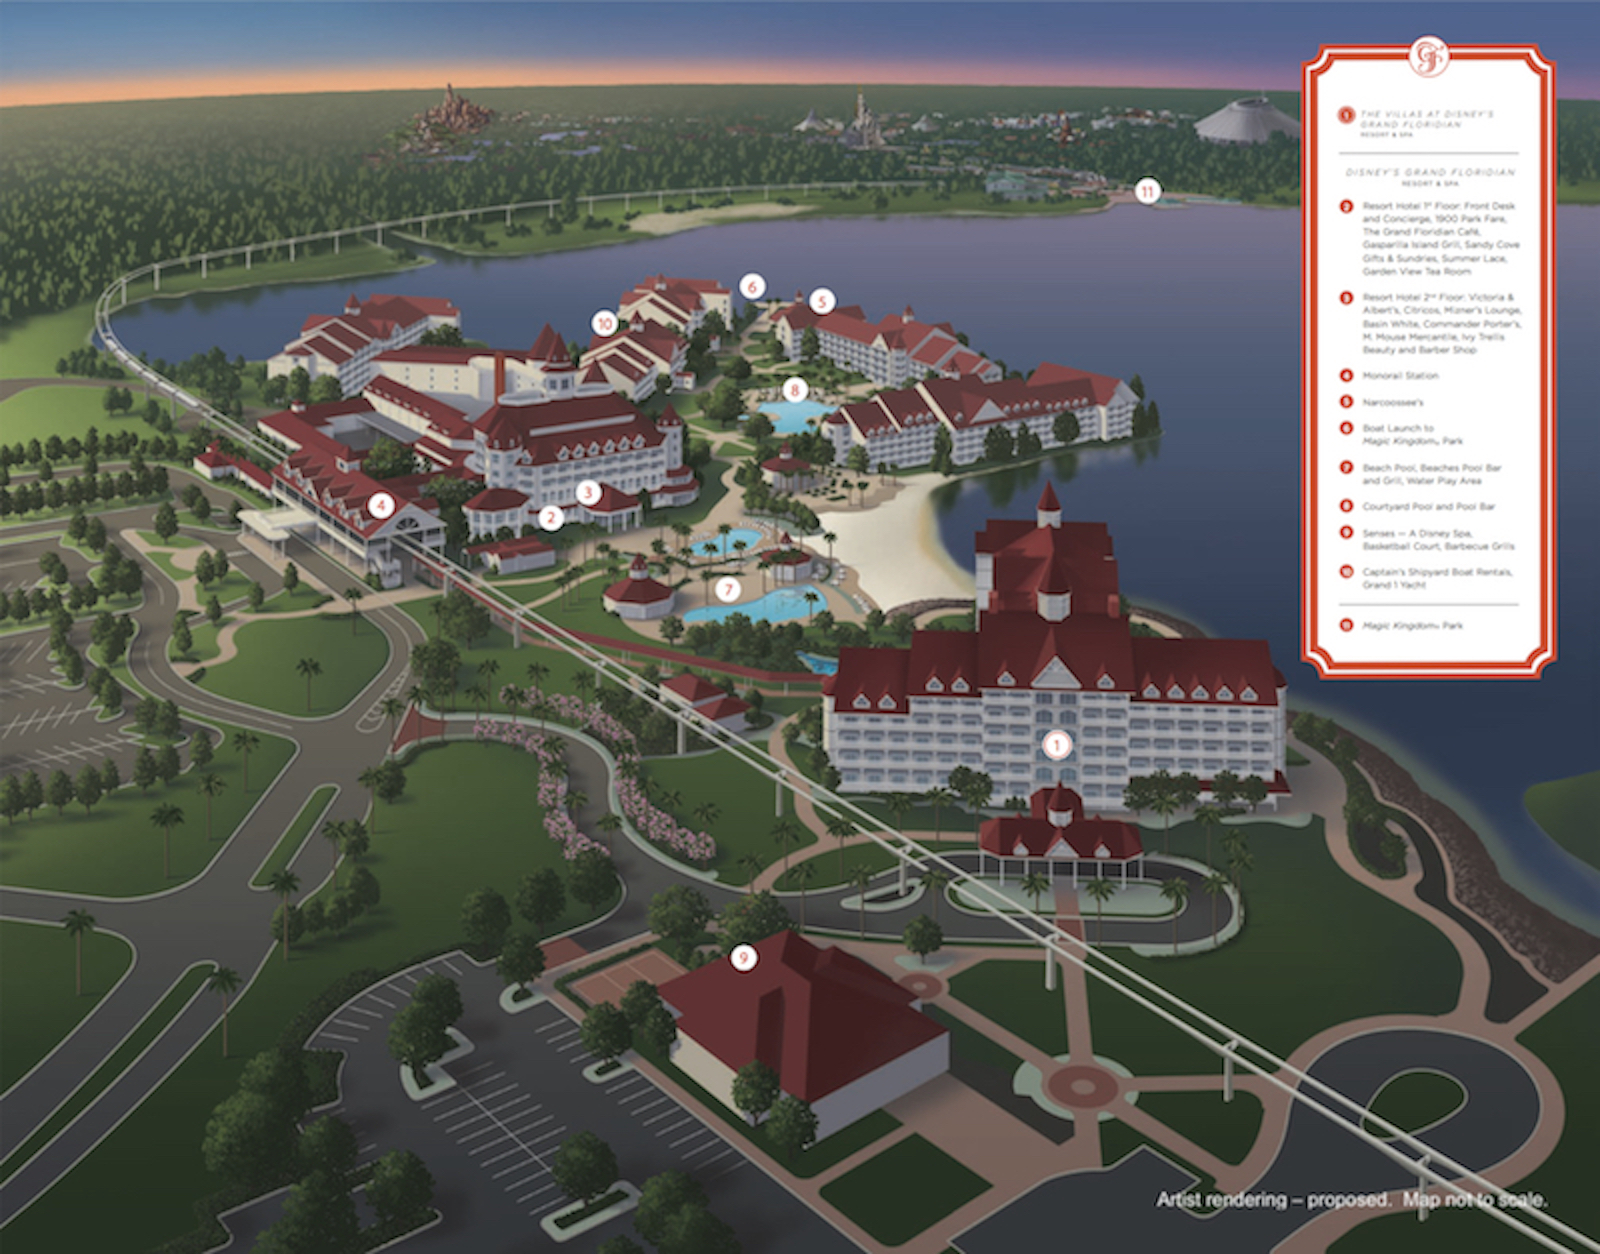 Villas at Disney's Grand Floridian Resort - Pre-Opening Rendering